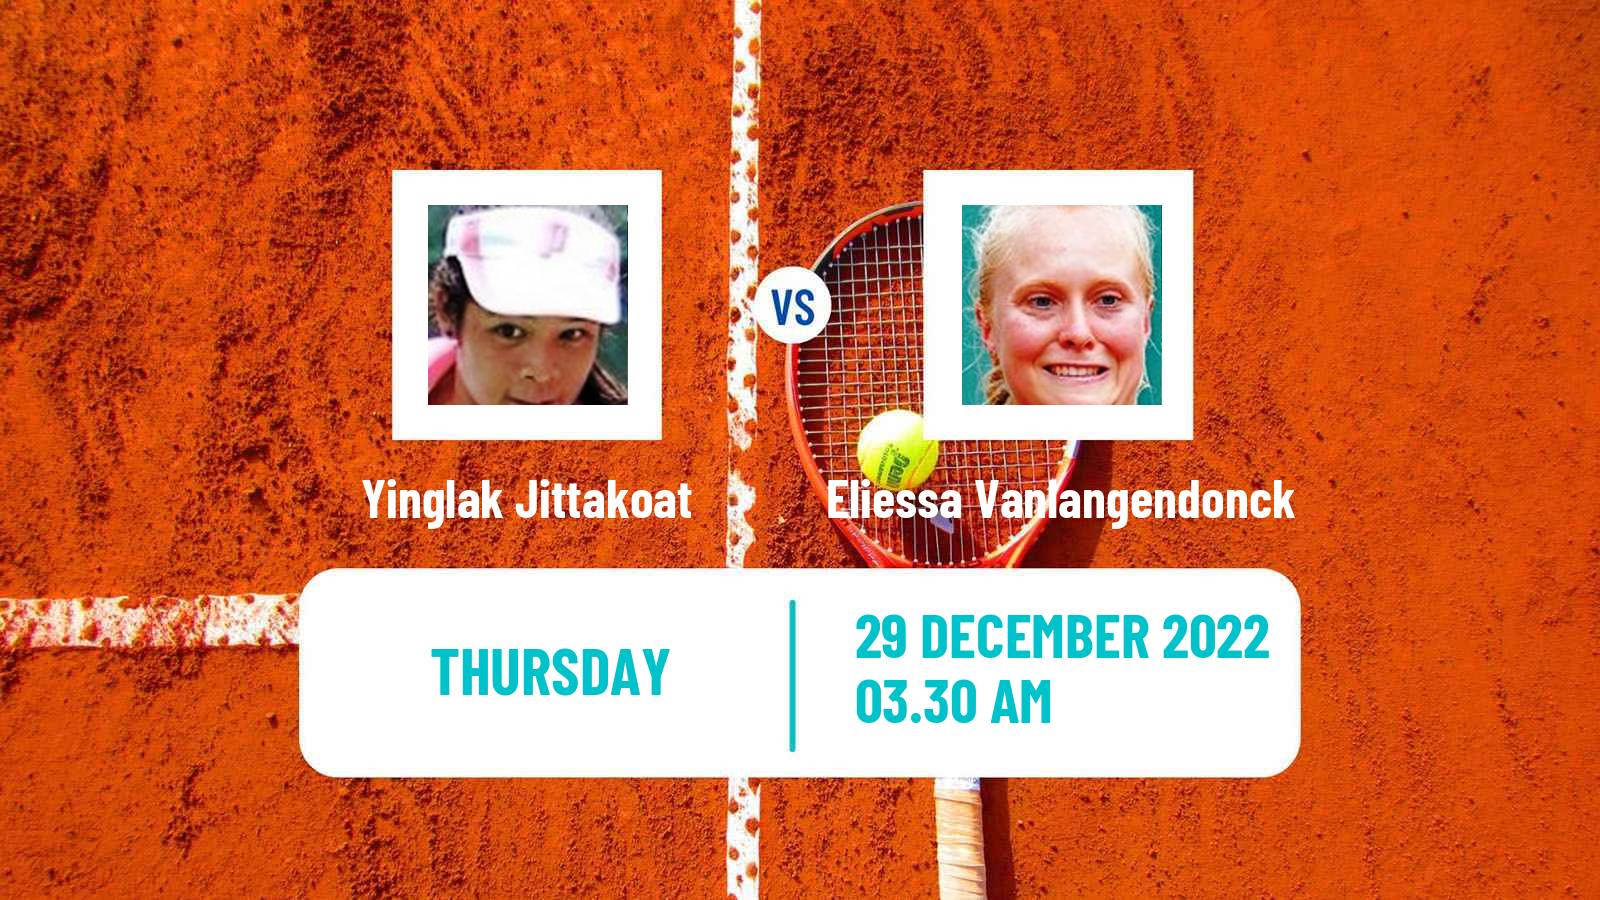 Tennis ITF Tournaments Yinglak Jittakoat - Eliessa Vanlangendonck